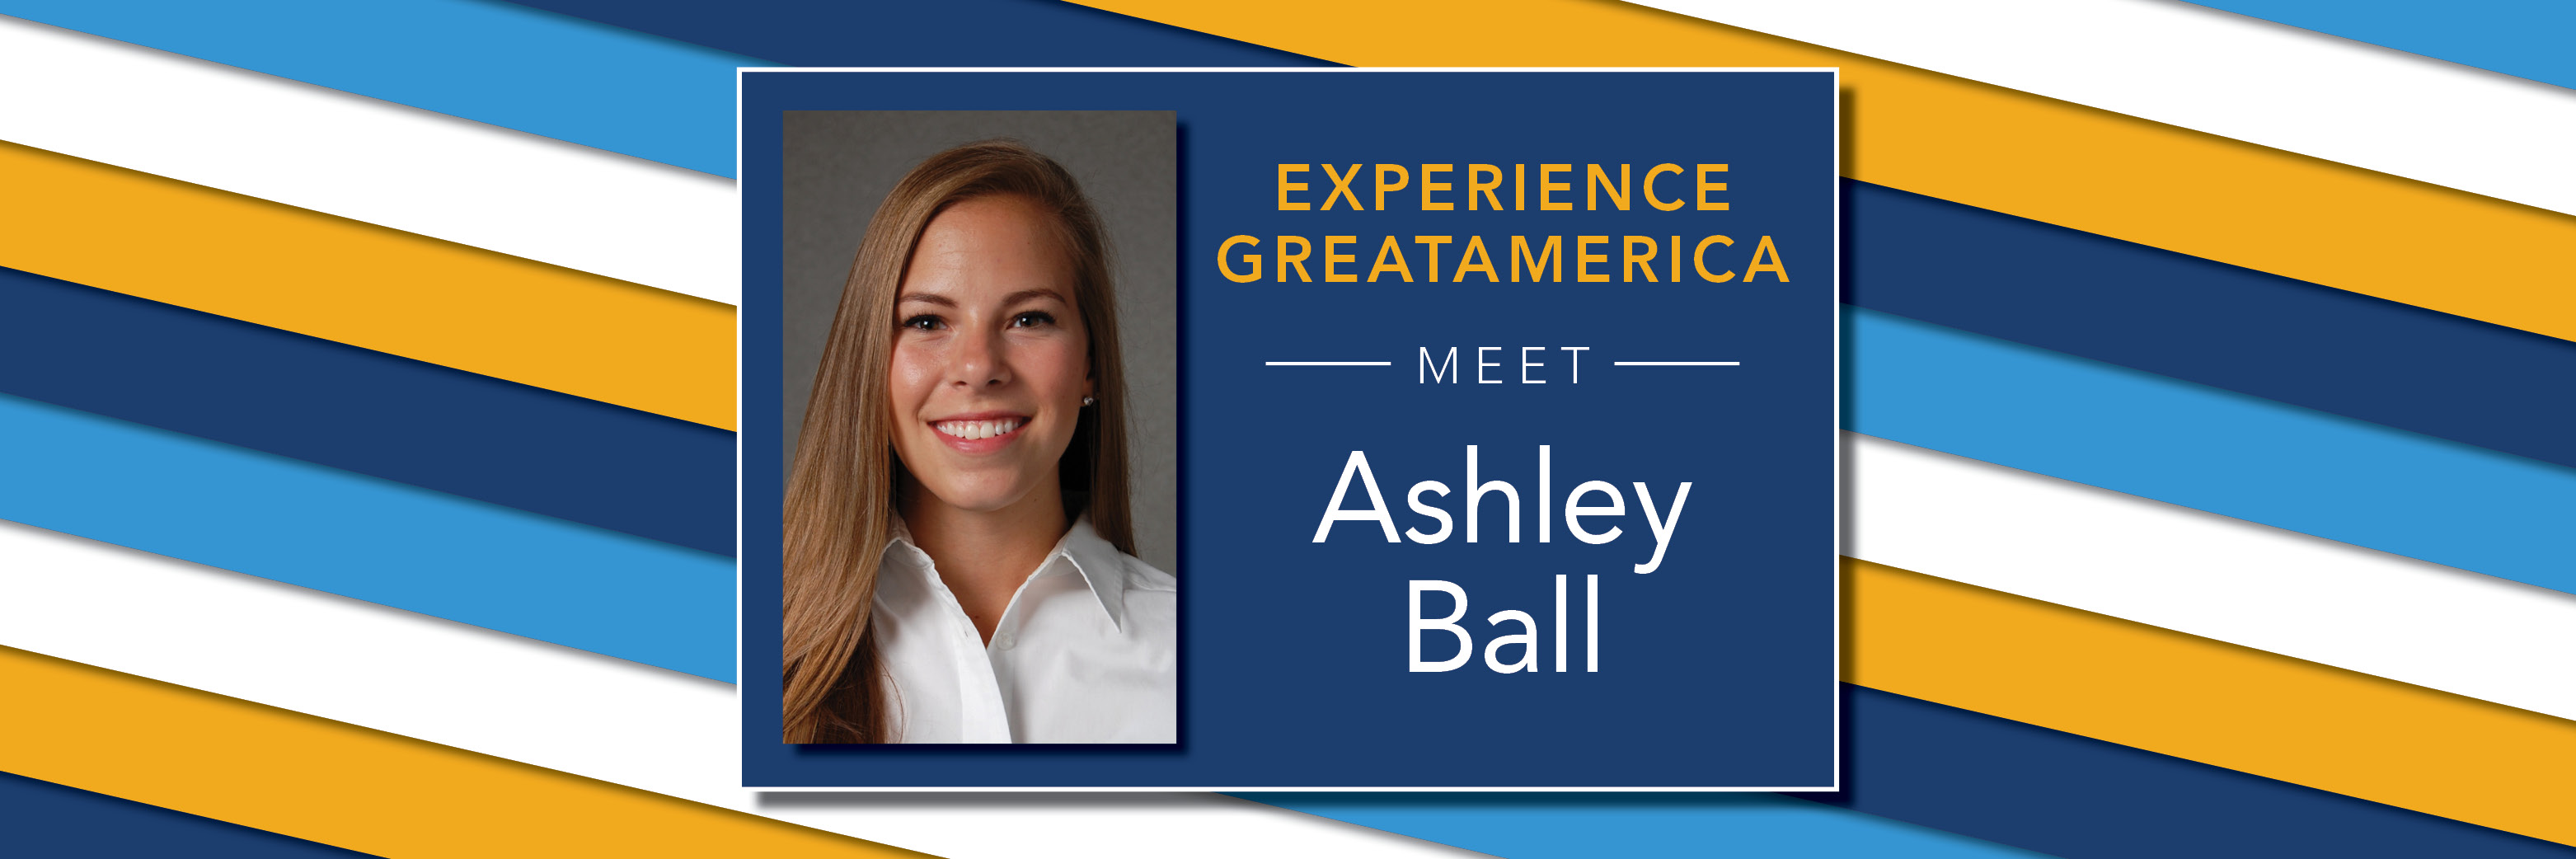 Experience GreatAmerica: Documentation Specialist Ashley Ball